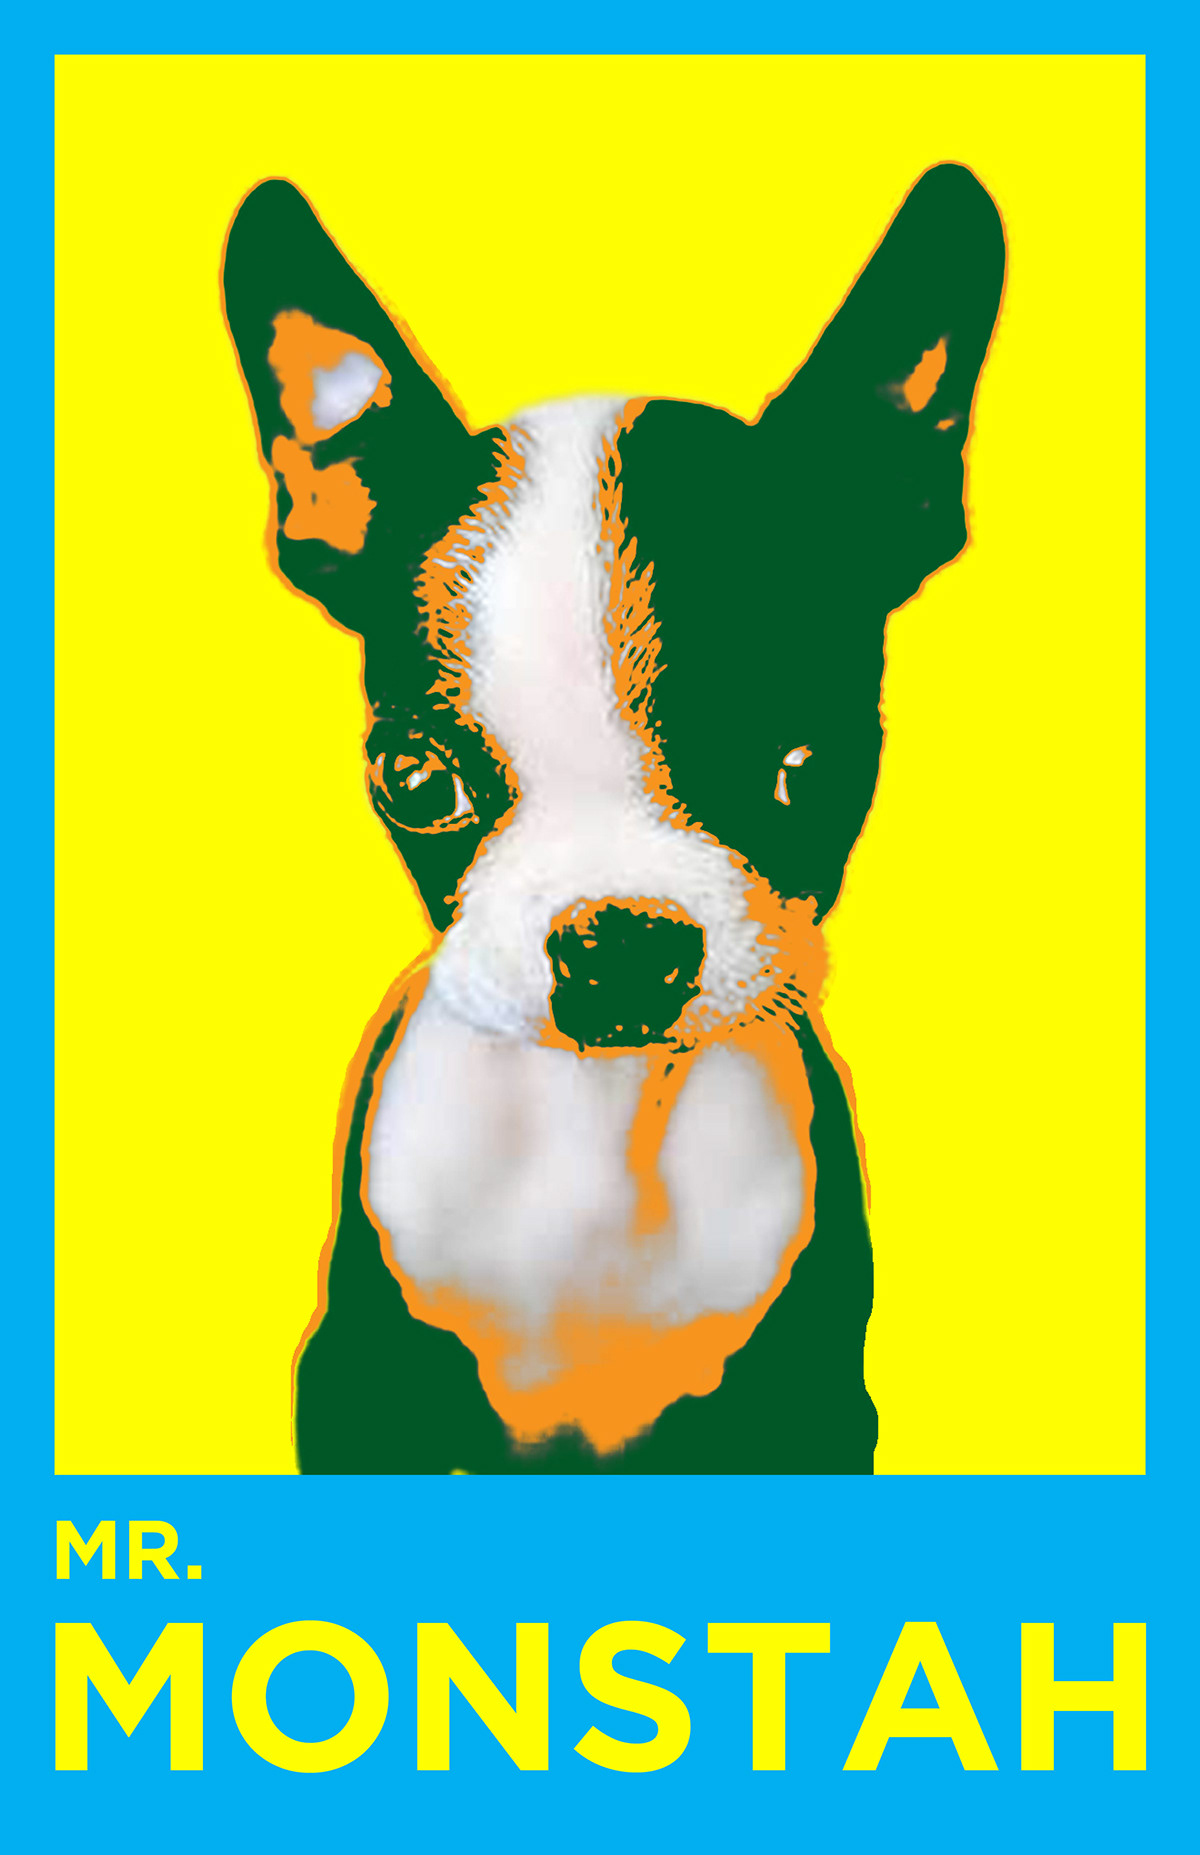 boston terrier boston puppy dog poster Pop Art warhol color photoshop bright Diggy bear monster cute animals